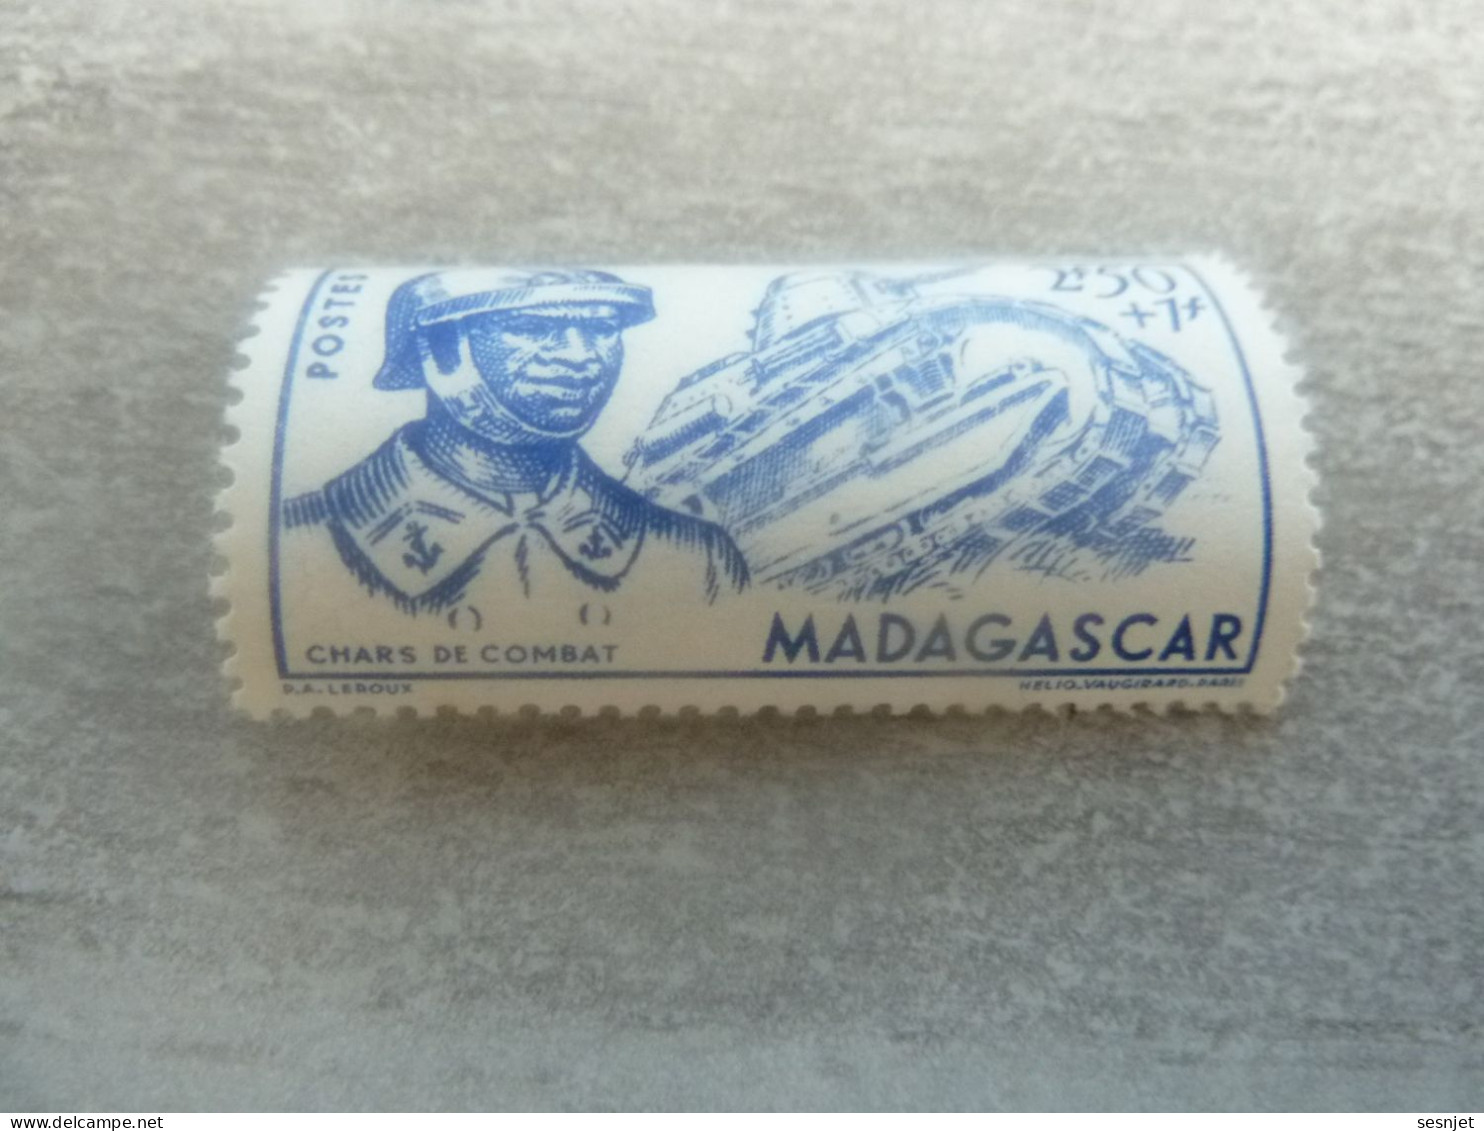 Madagascar - Chars De Combat - 2f.50+1f. - Yt 228 - Helio Vaugirard Paris - Bleu - Neuf - Année 1941 - - Unused Stamps